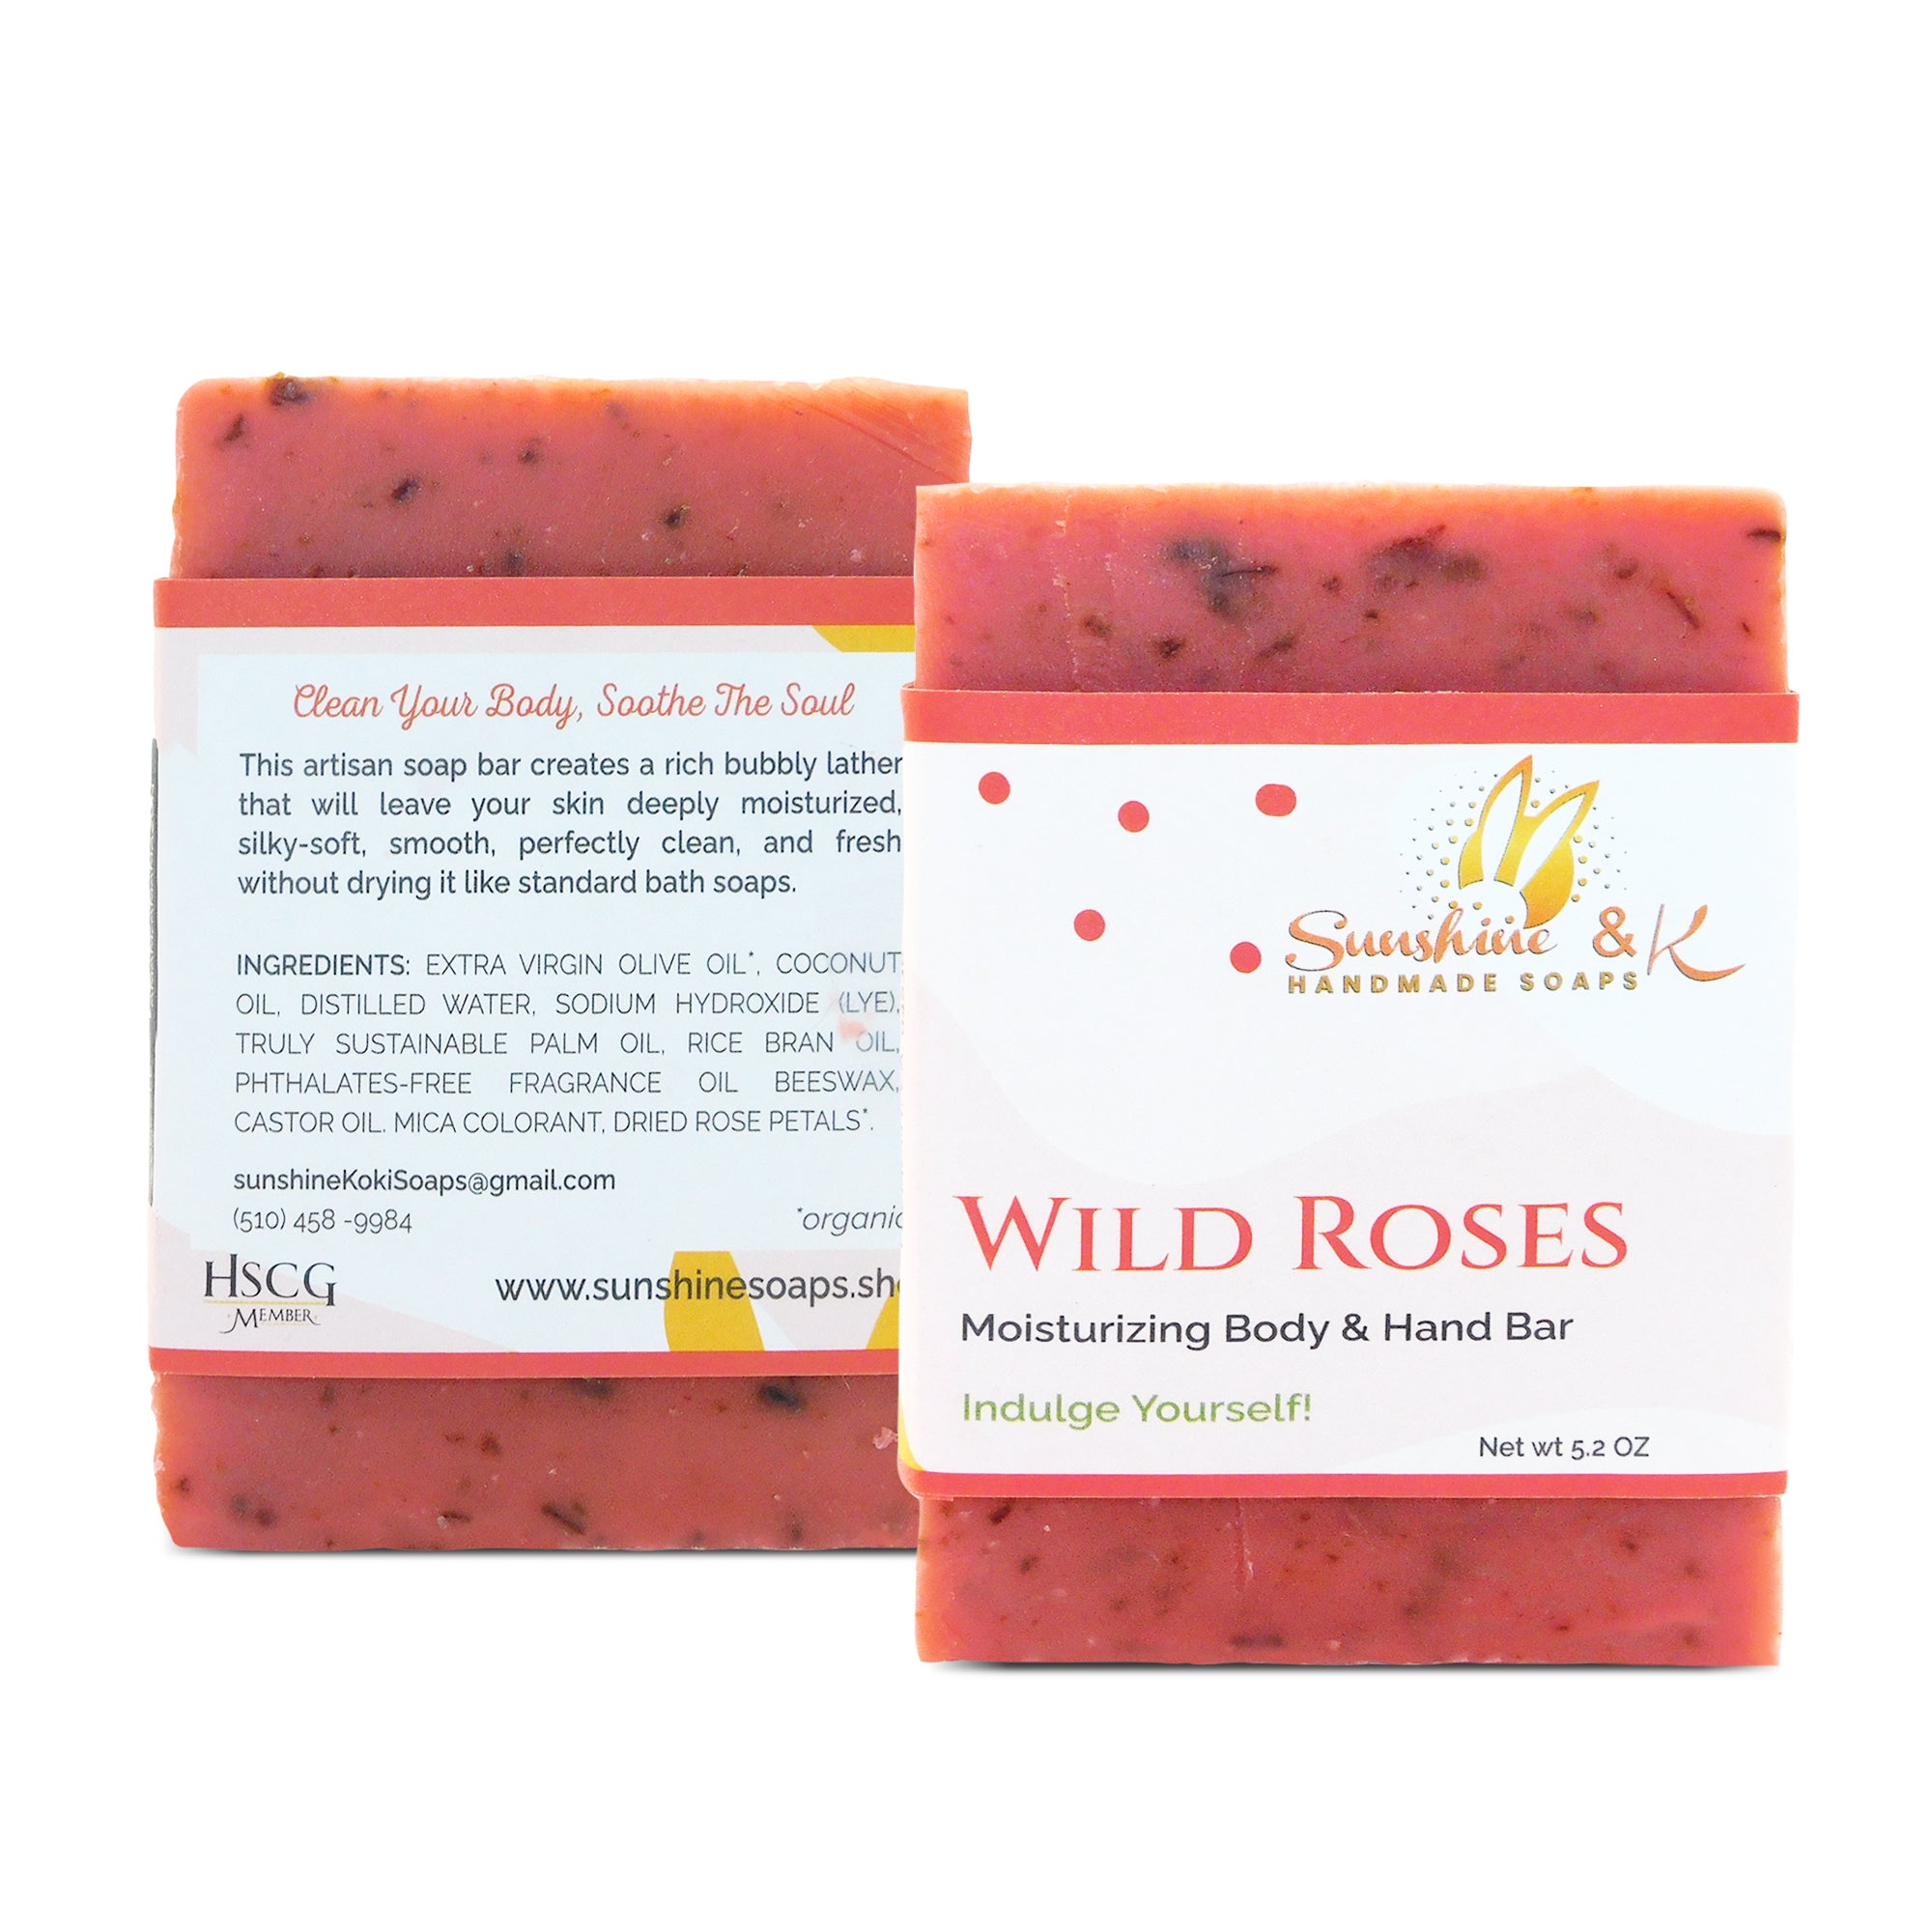 Wild roses Soap Bar - Body & Face Bar Soap, Handmade Bath Soap, Moisturizing Bar Soap With Beeswax, Rice Bran Oil, & Natural Base Oils, Natural Soap Bars, 5 oz, Sunshine & K Handmade Soaps - sunshine-handmade-soaps